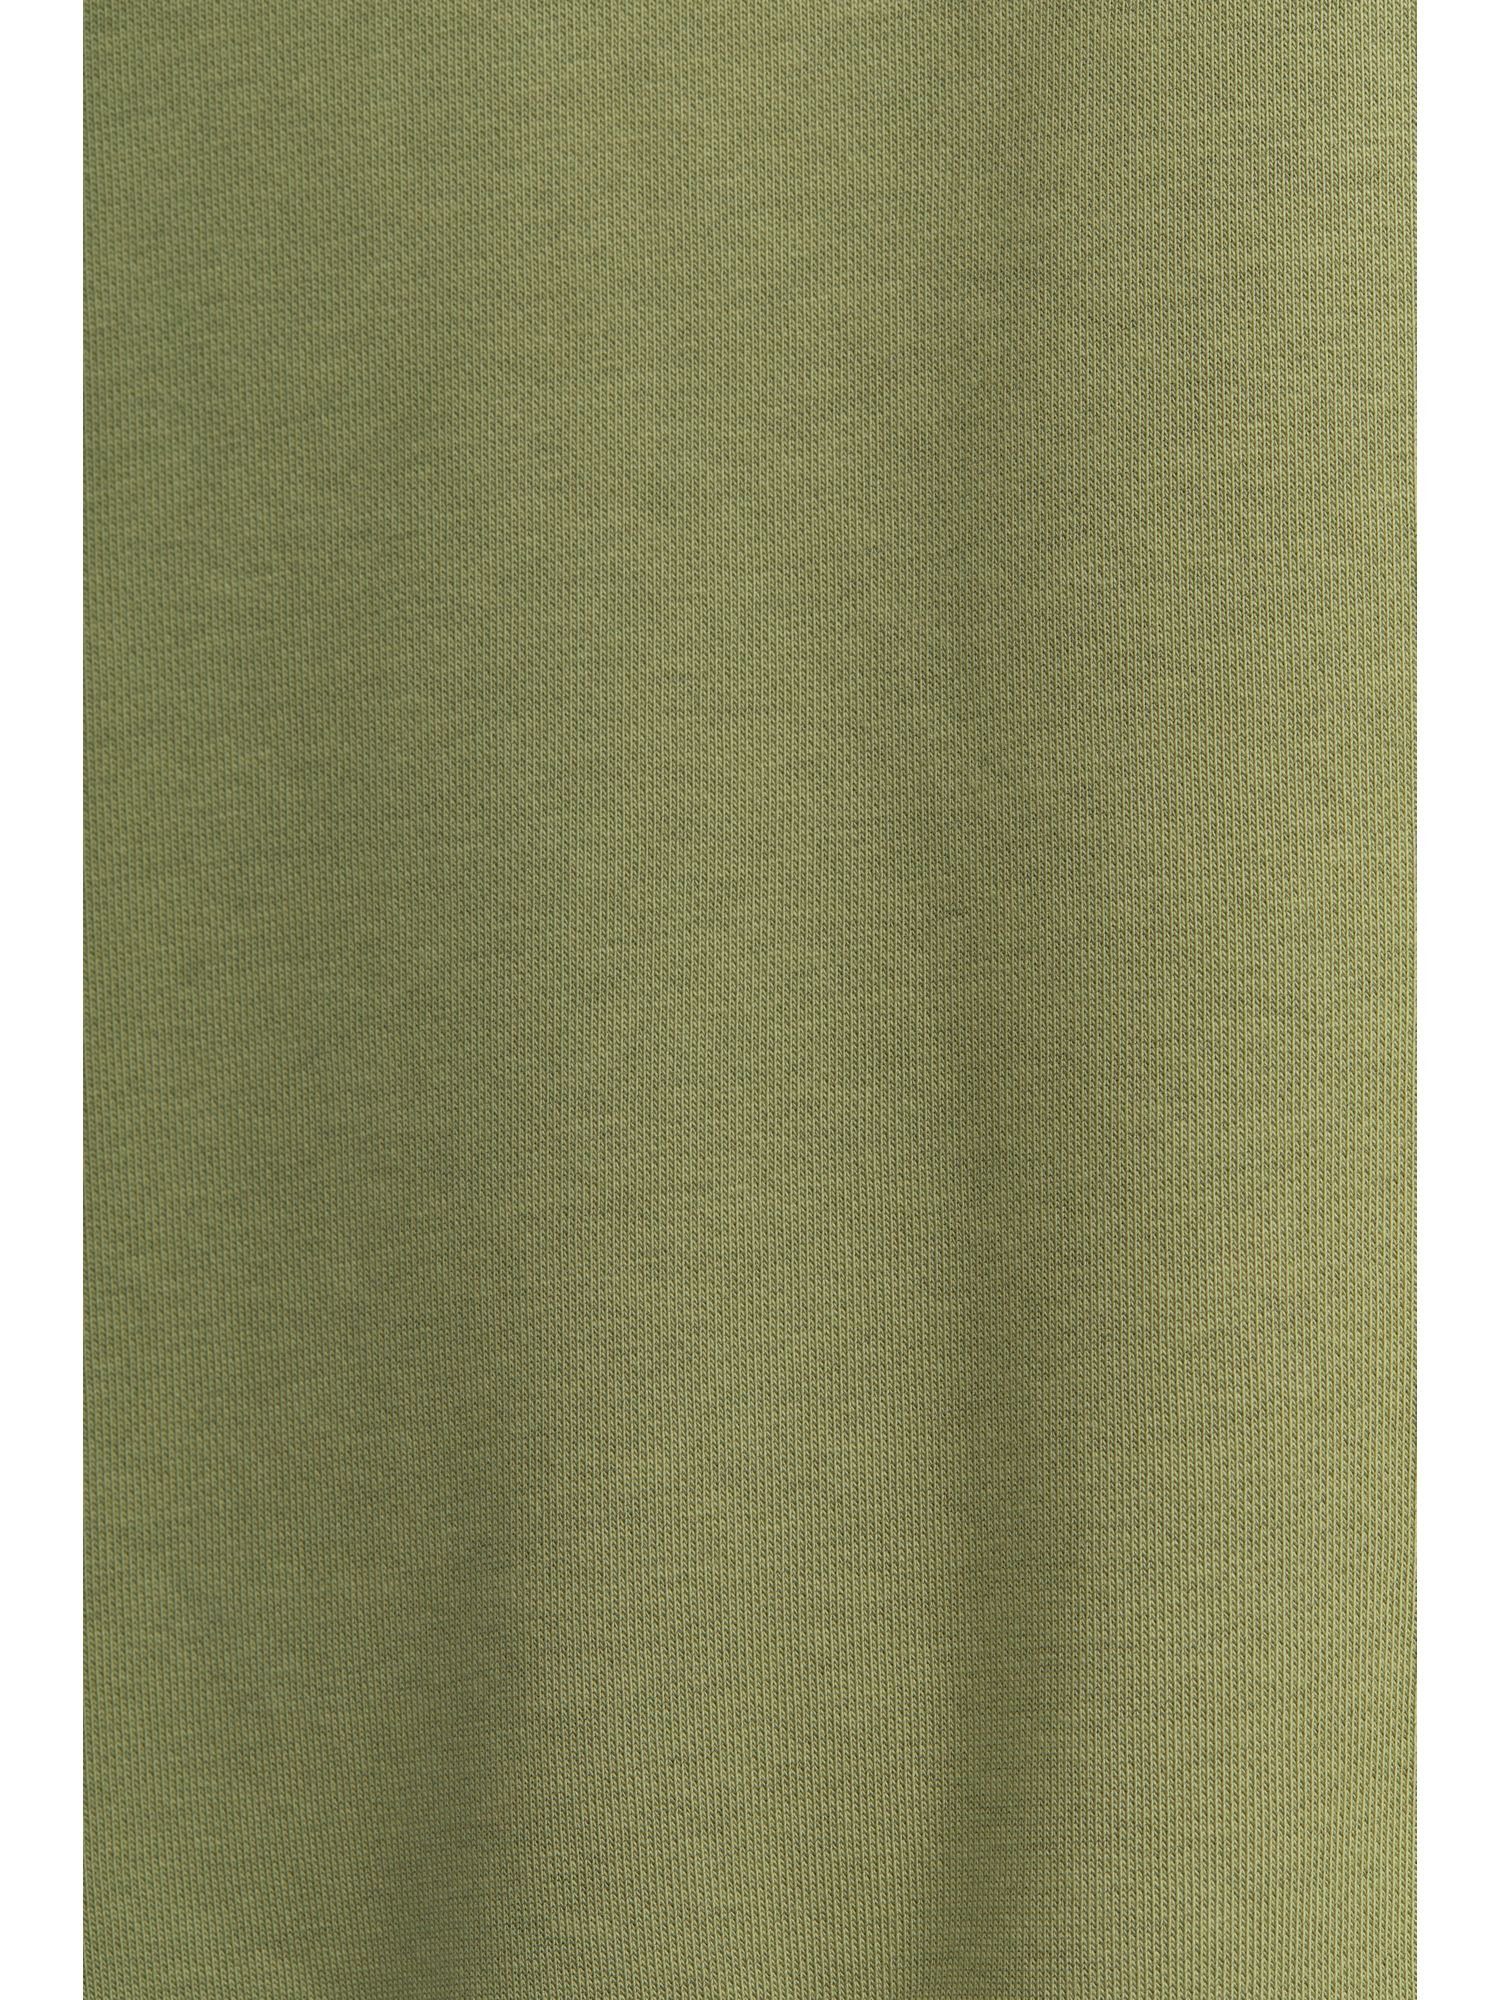 Esprit Sweatshirt Unisex mit Logo (1-tlg) Fleece-Hoodie OLIVE